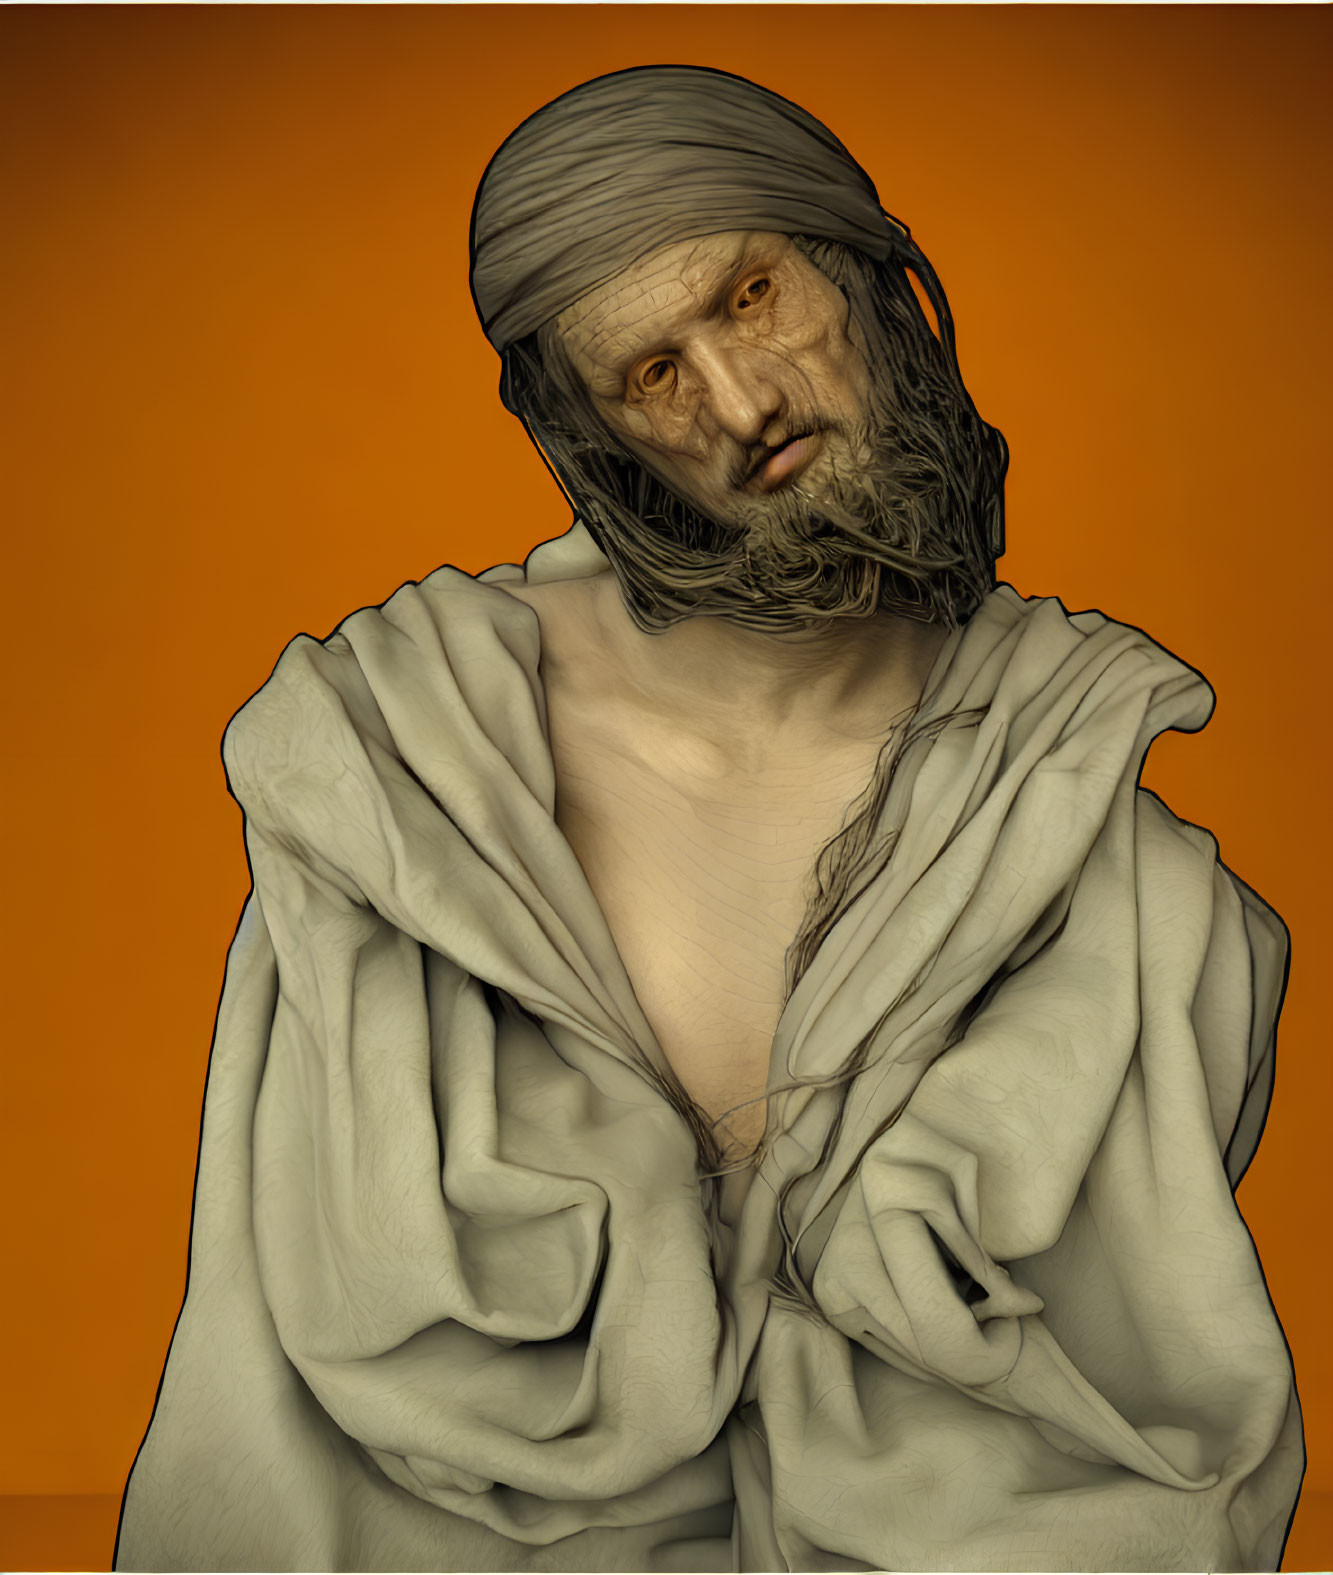 Digital Artwork: Bearded Figure in Turban and Toga on Orange Background